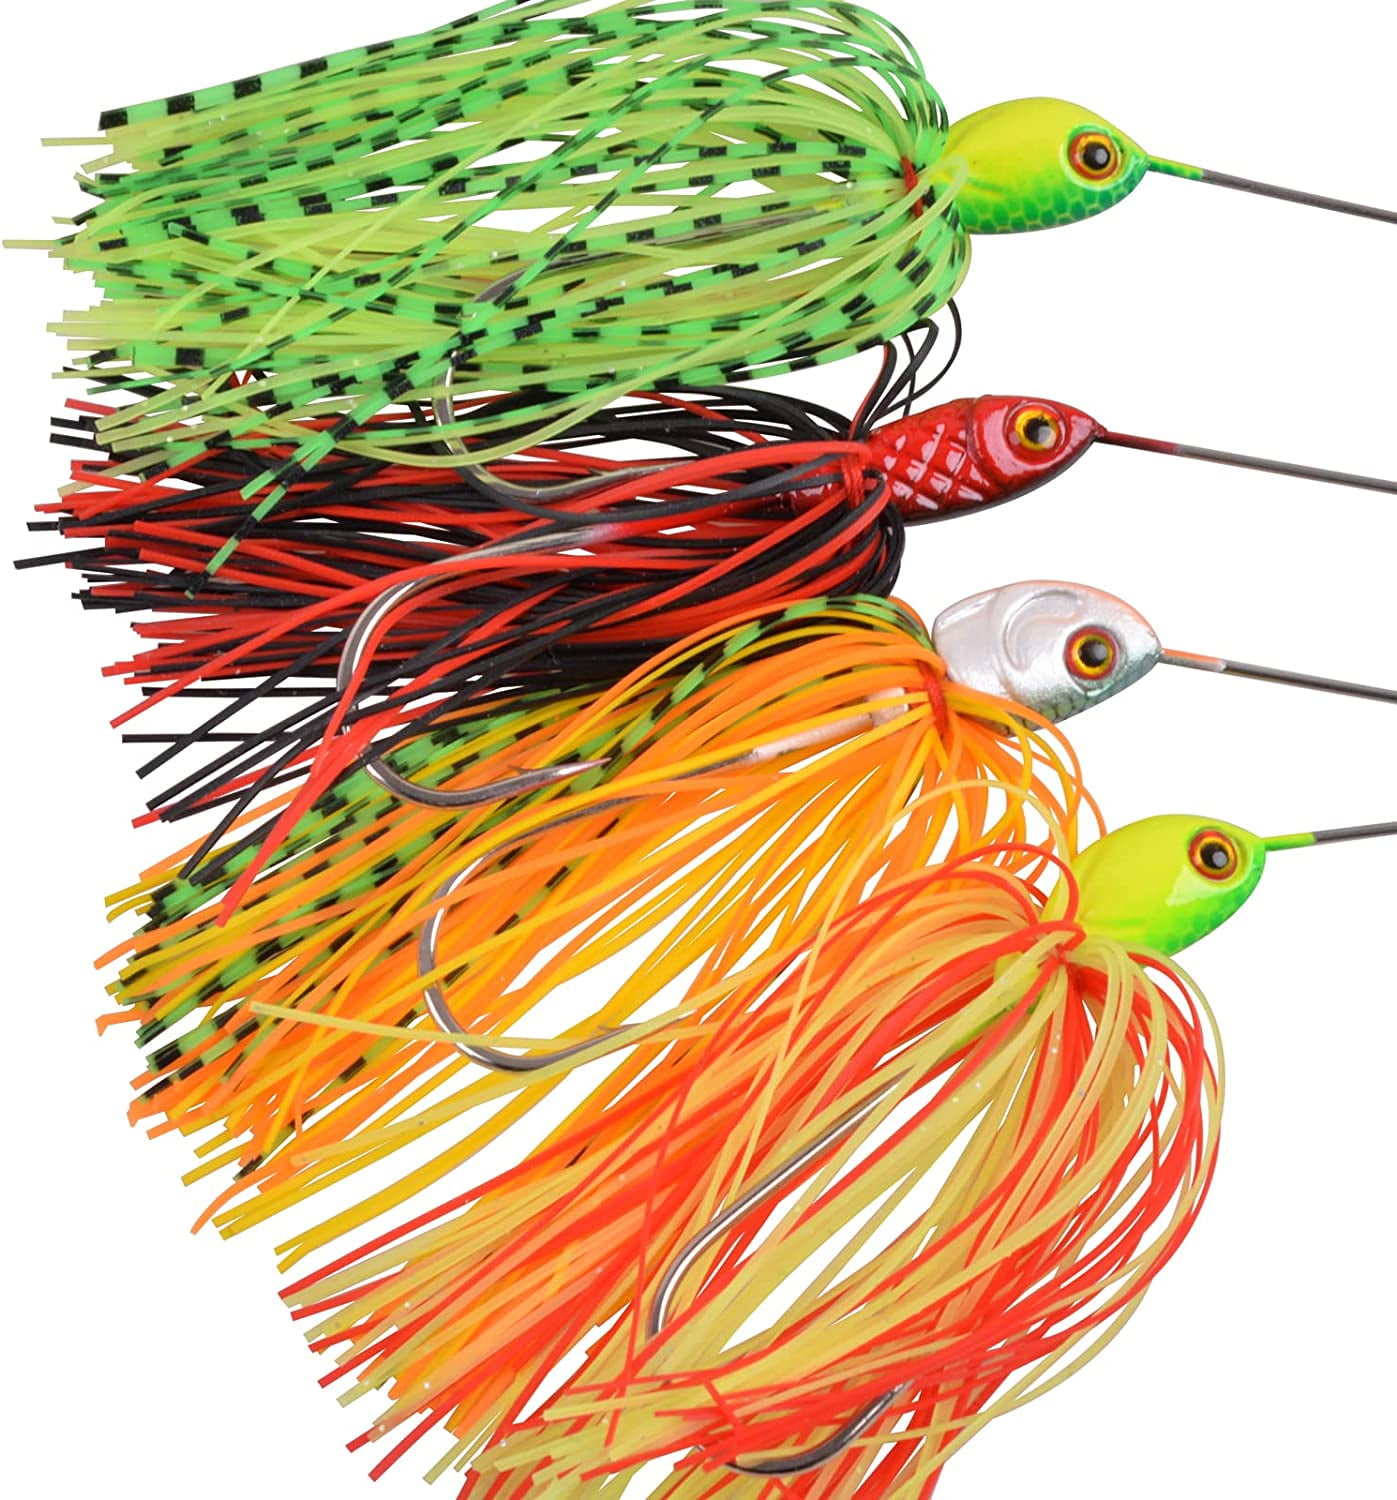 OROOTL Fishing Lures Spinner Making Kit, 150Pcs Colorful Colorado